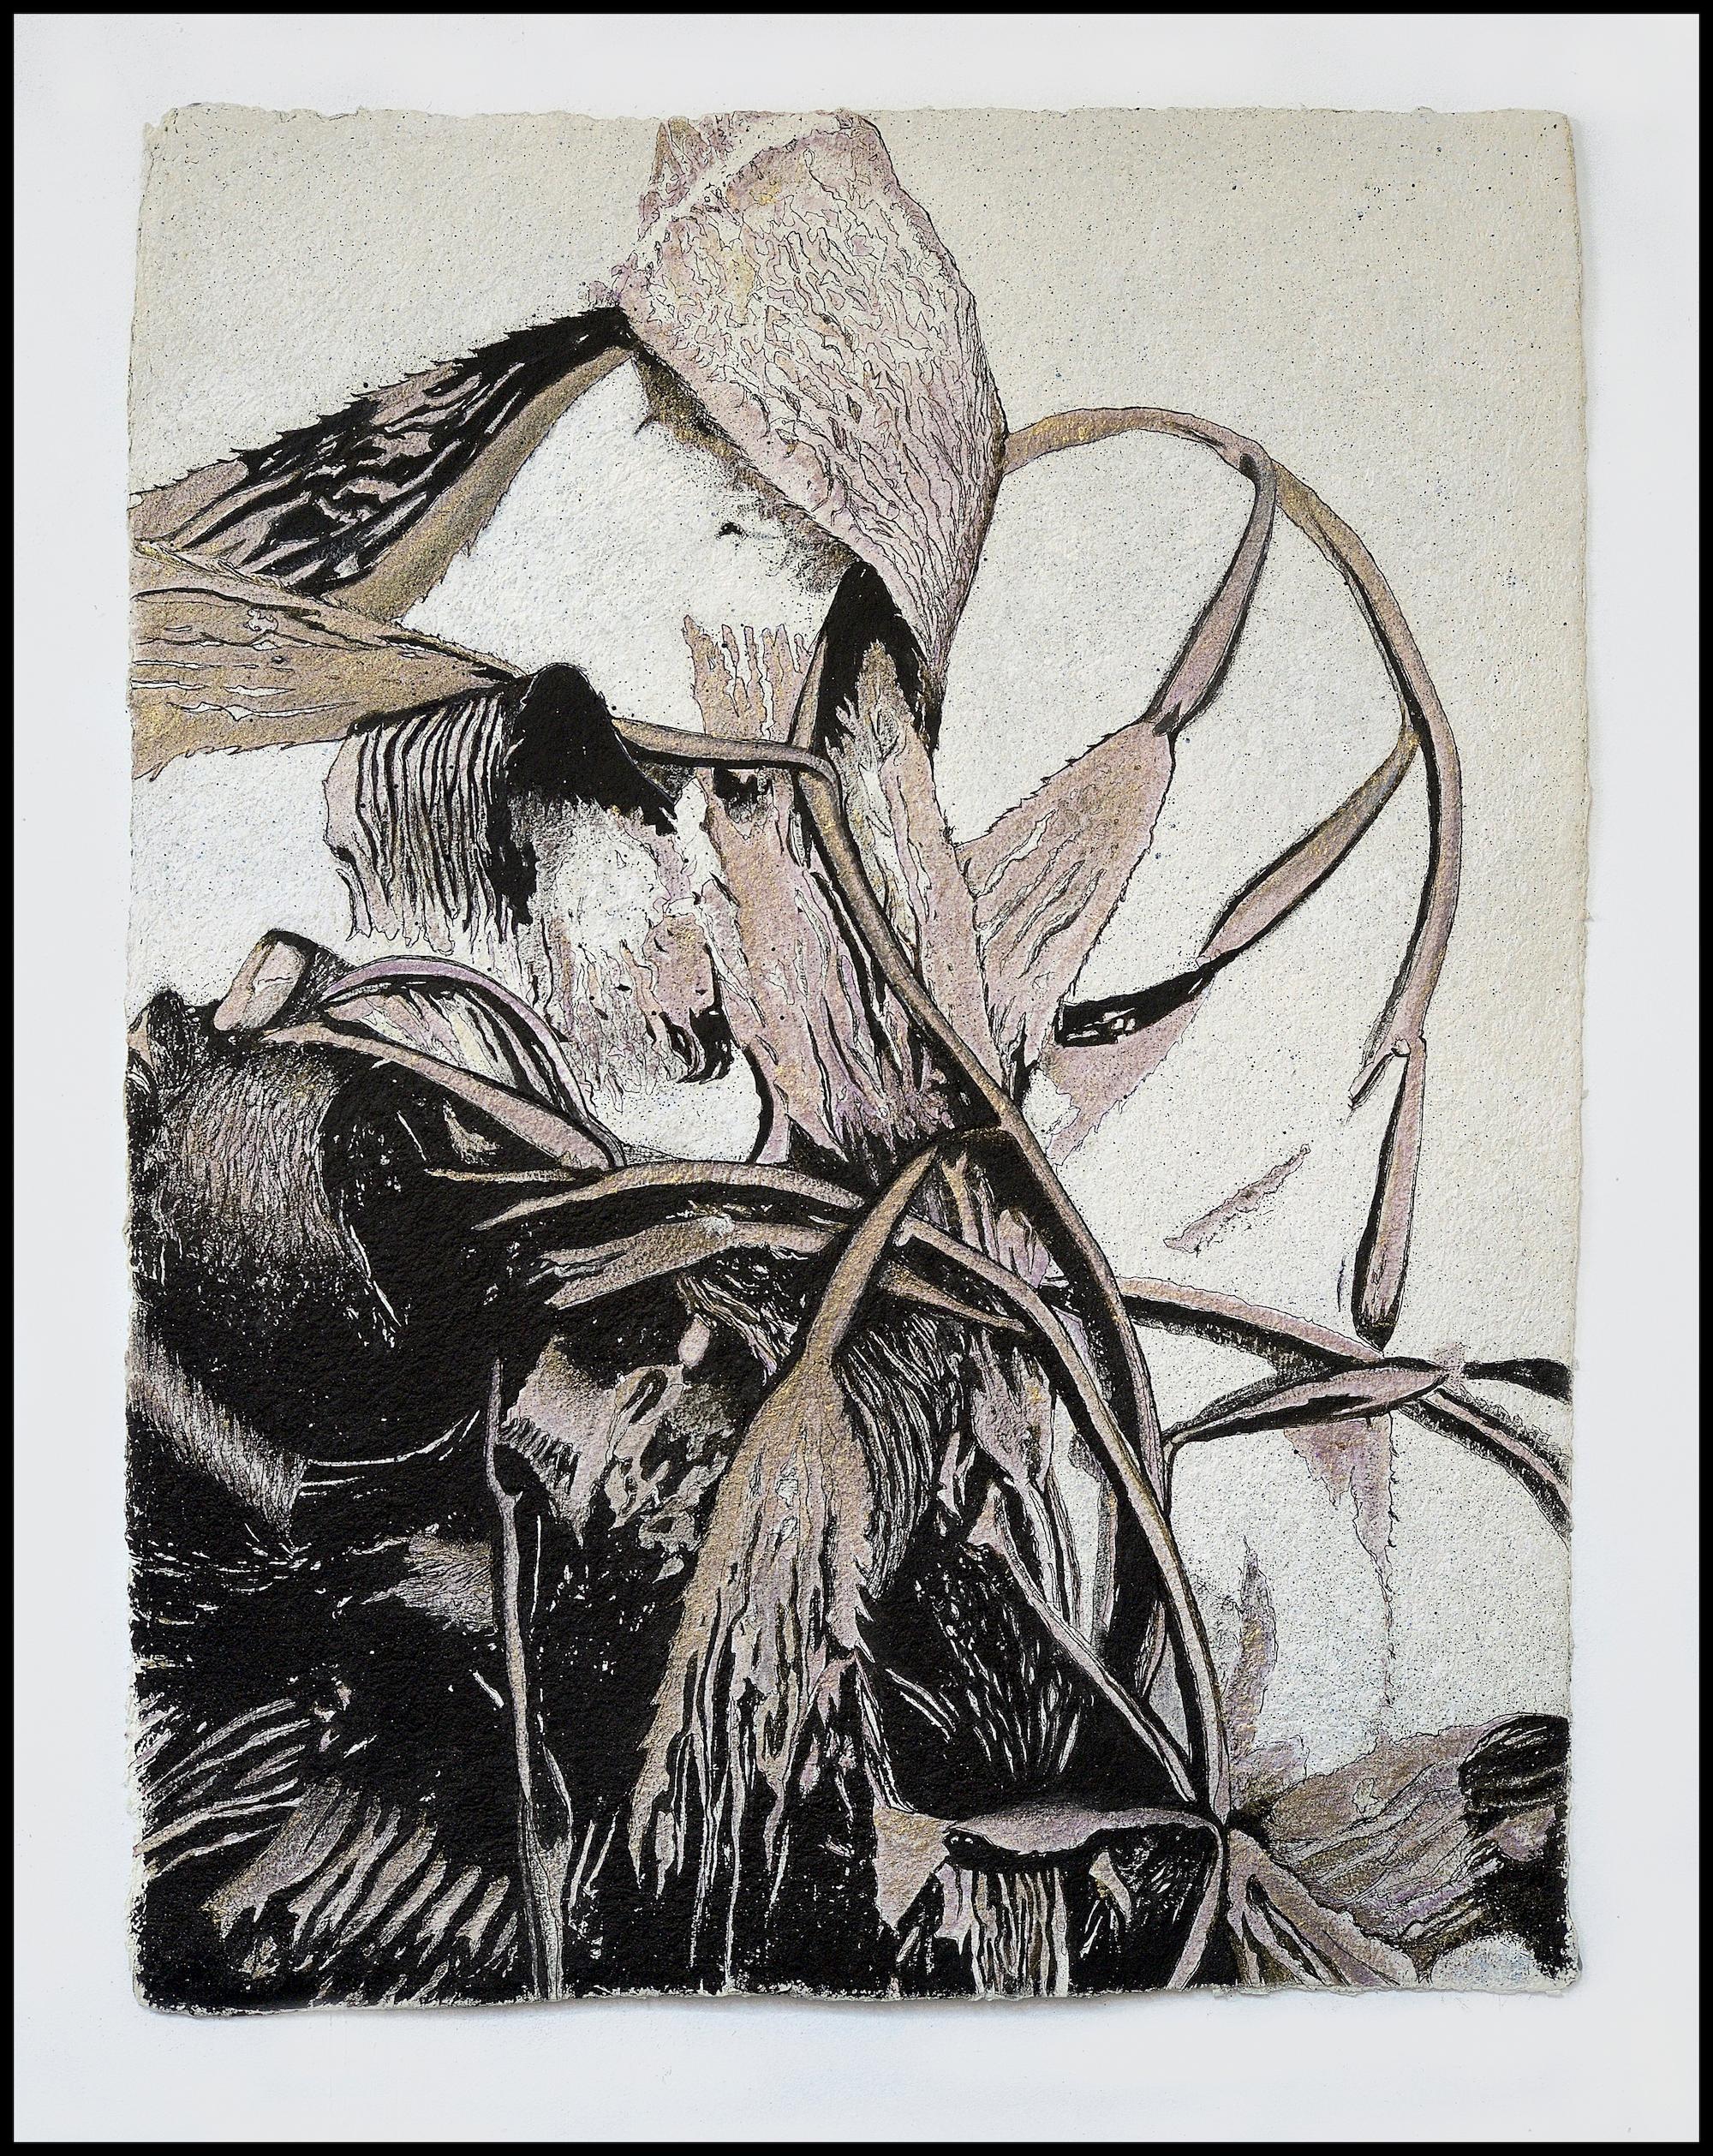 Frédéric Choisel Abstract Painting - Alga Aligata No. 2- seaweed kelp oceanic abstracted work on paper